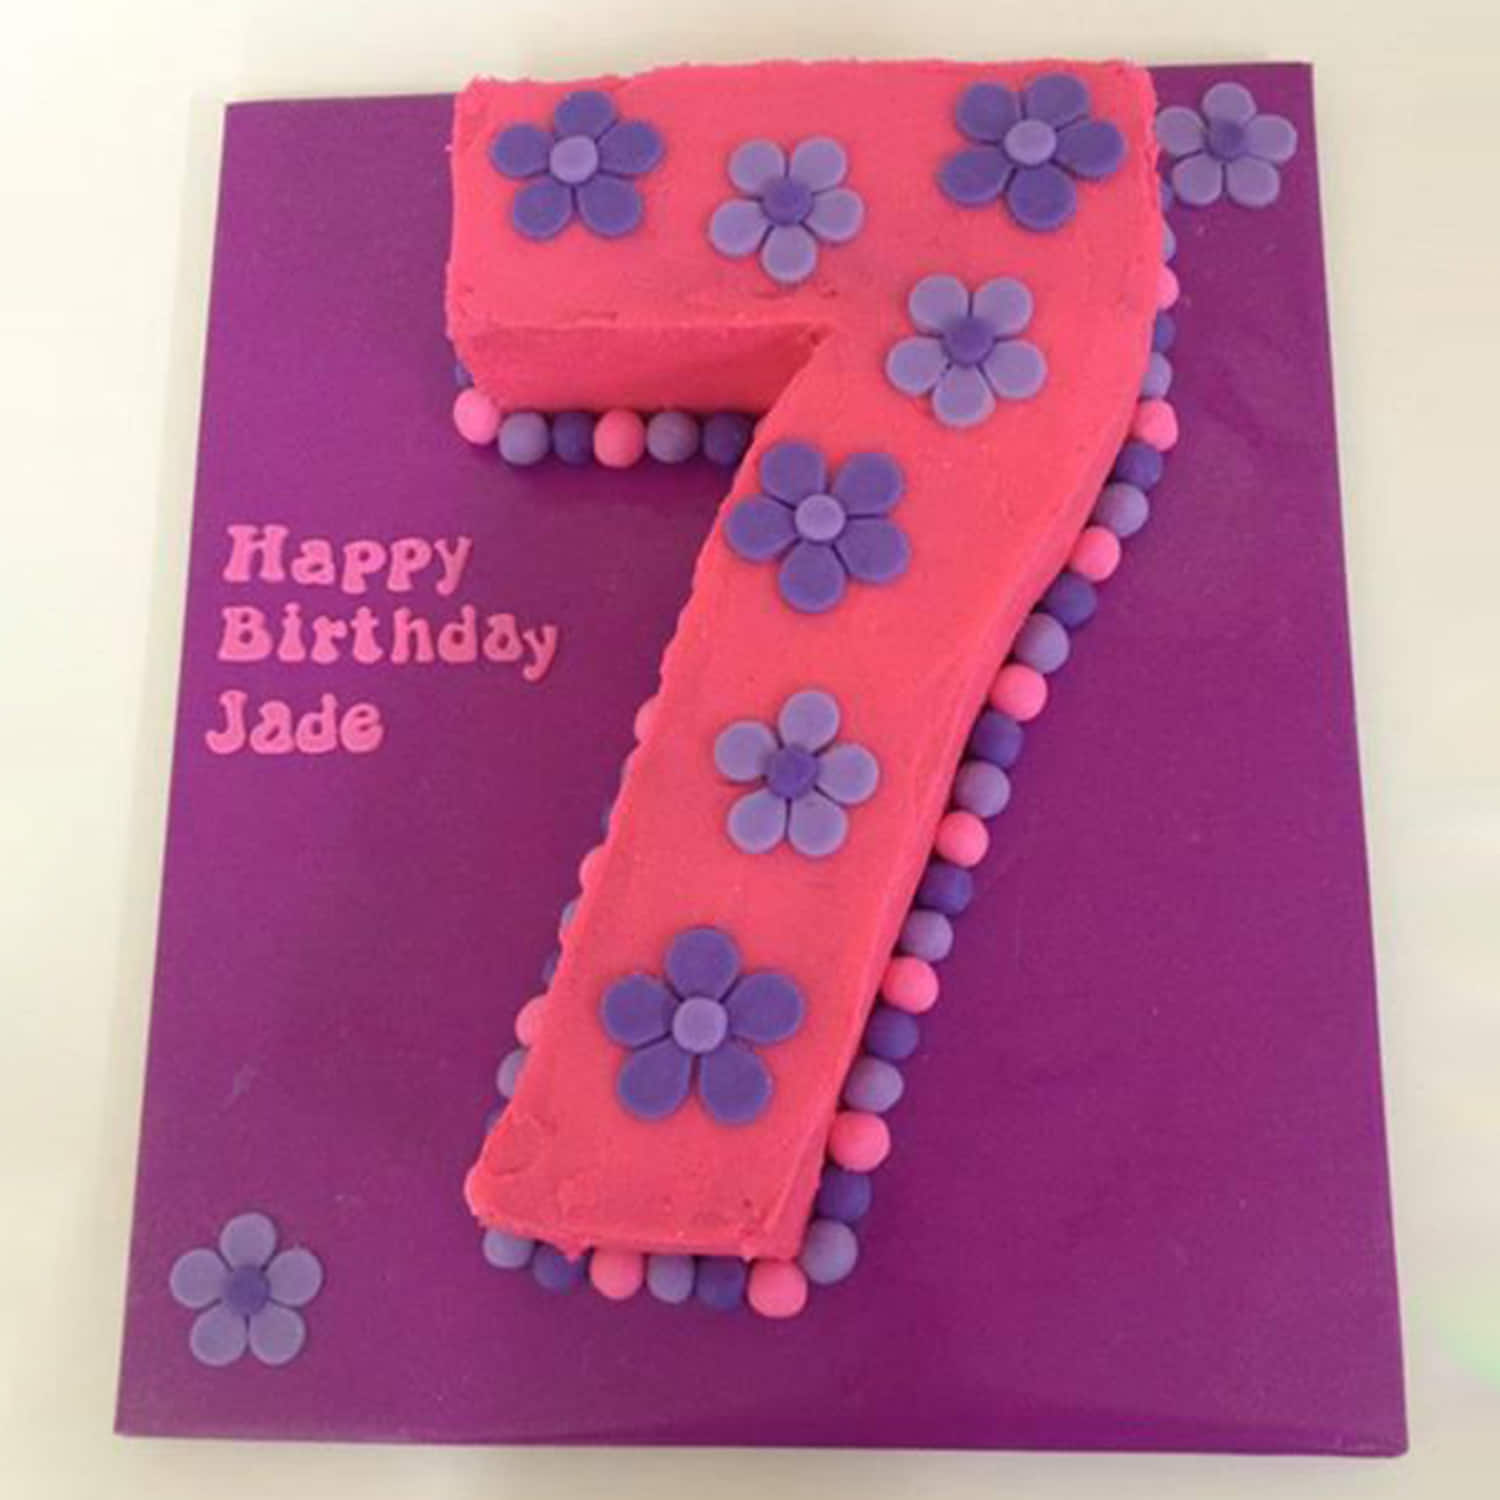 Buy/Send 7 Number Cake for Birthday Online @ Rs. 5199 - SendBestGift